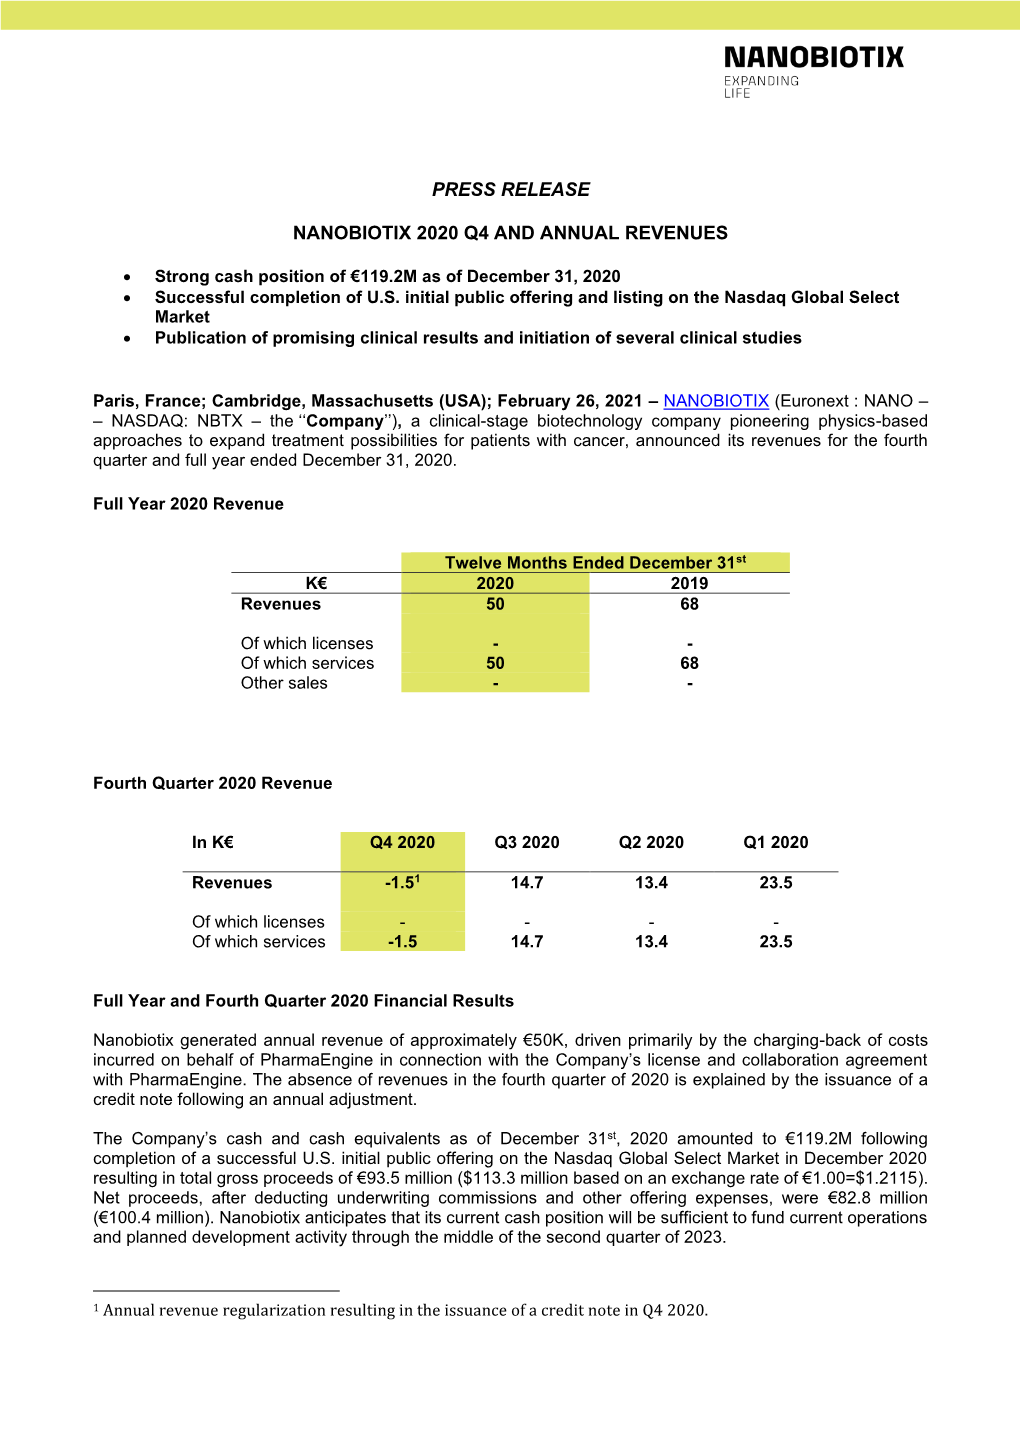 Press Release Nanobiotix 2020 Q4 and Annual Revenues